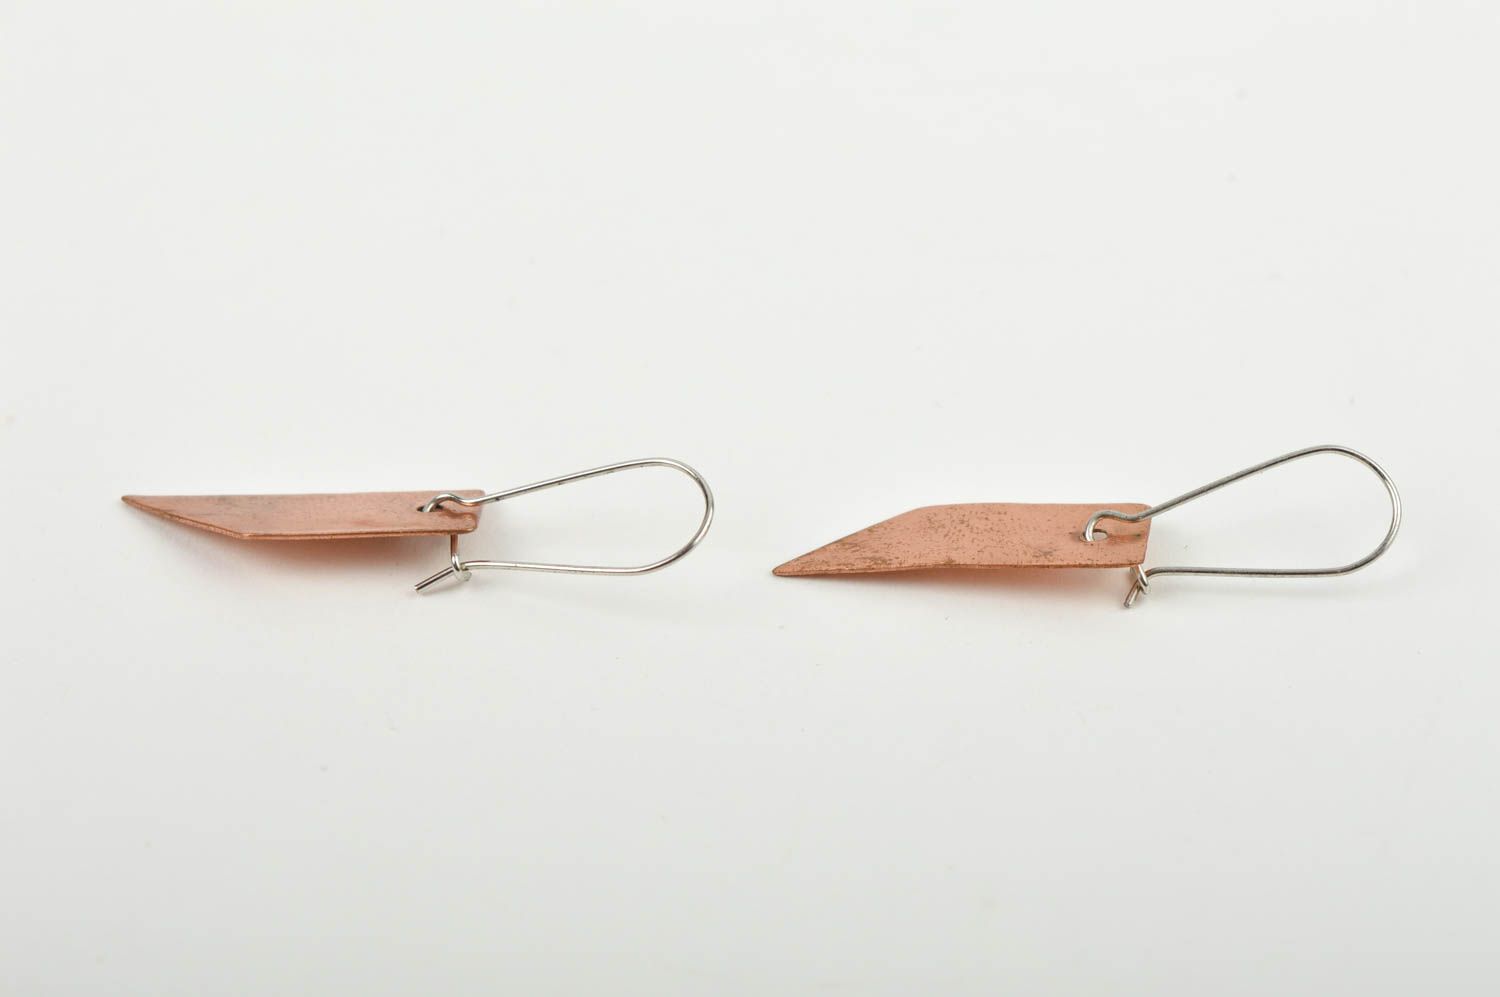 Designer handmade earrings copper stylish jewelry dangling earrings gift photo 5